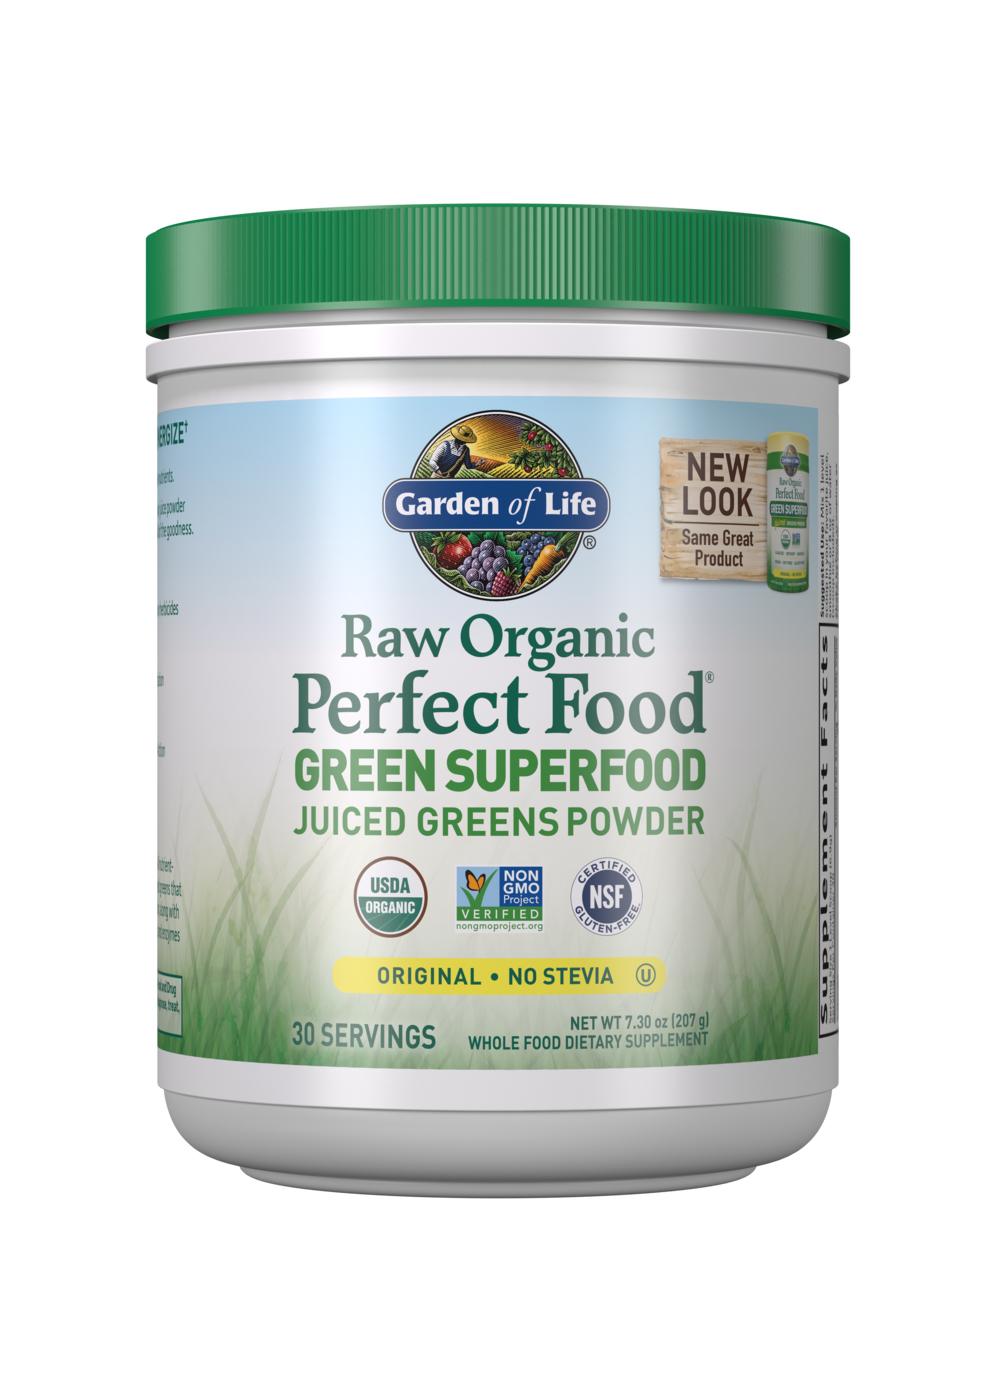 Garden of Life Raw Organic Perfect Food Green Superfood Original No Stevia Juiced Greens Powder; image 1 of 2